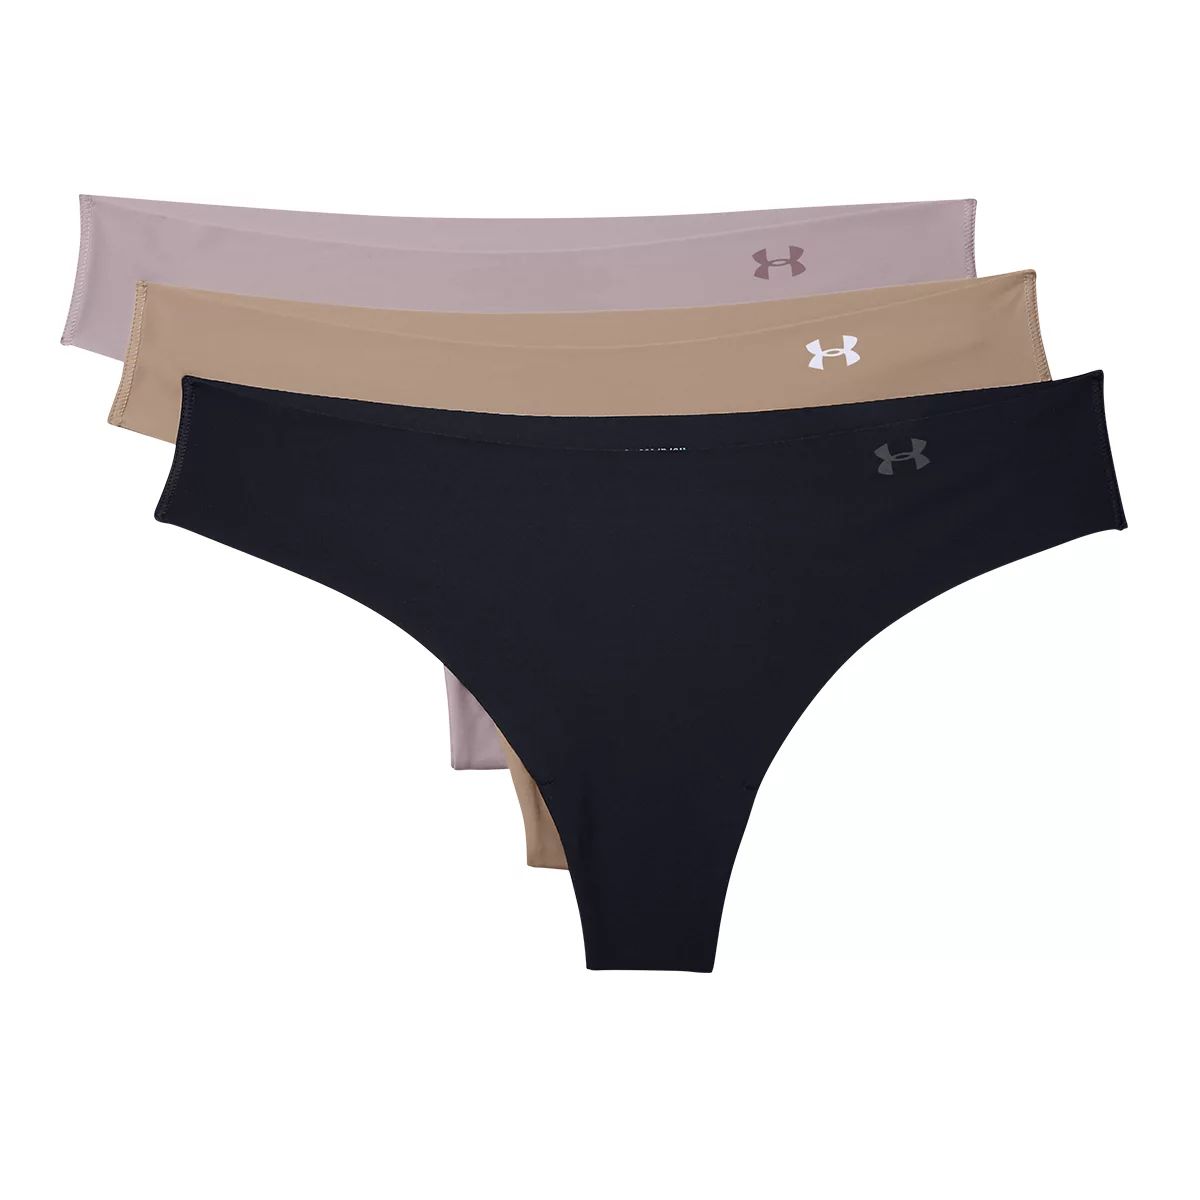  Balanced Tech Women's Seamless Thong Panties 3 Pack